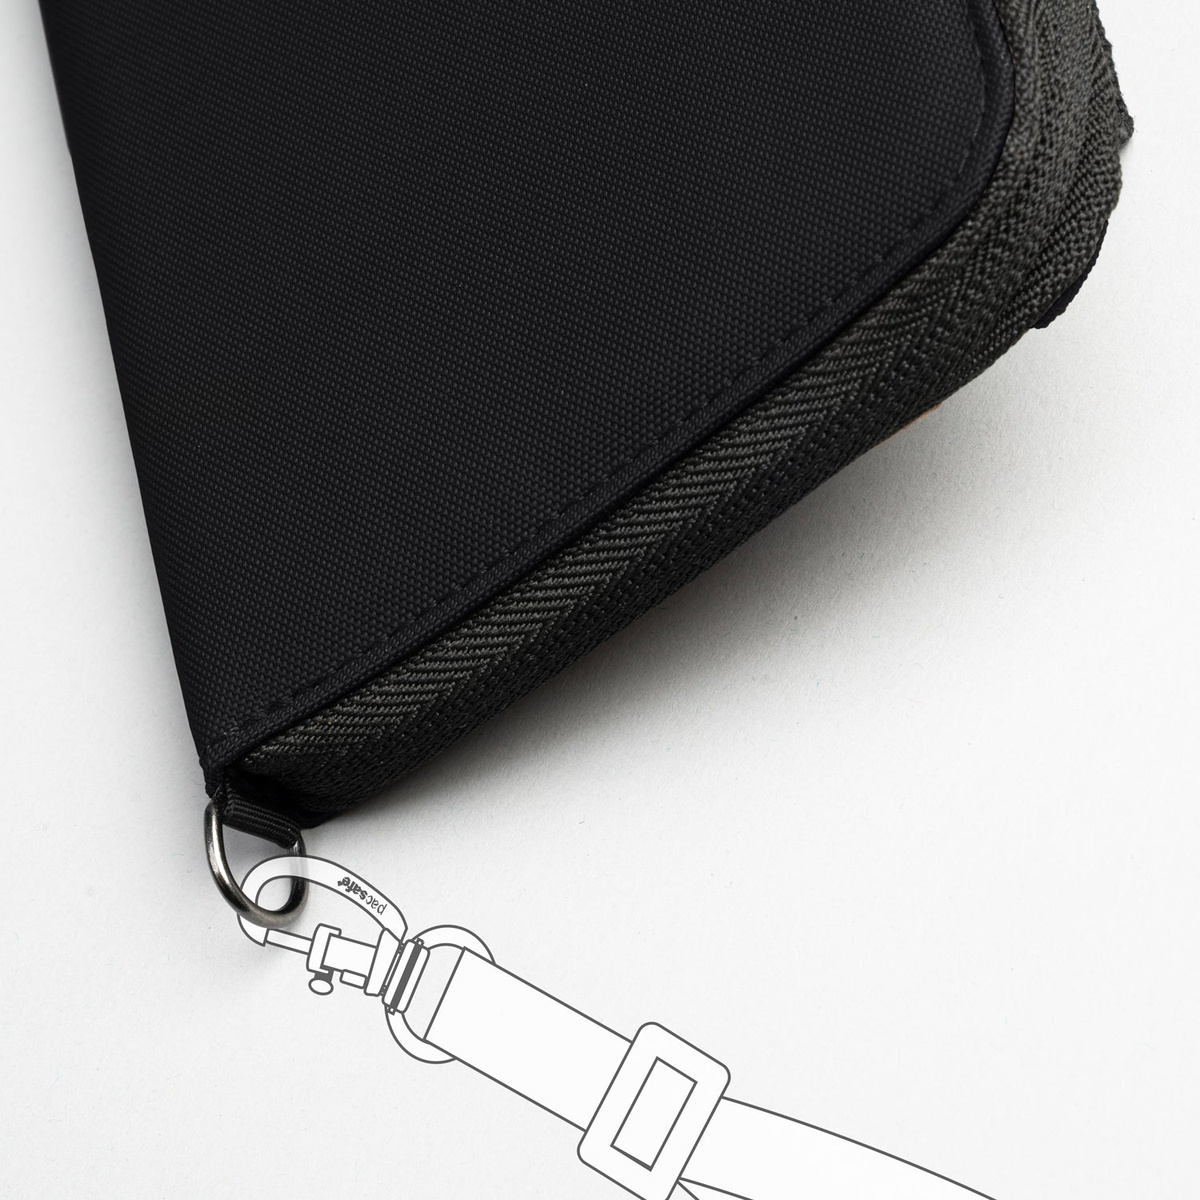 Etui antykradzieżowe Pacsafe RFIDsafe Compact Travel Tan